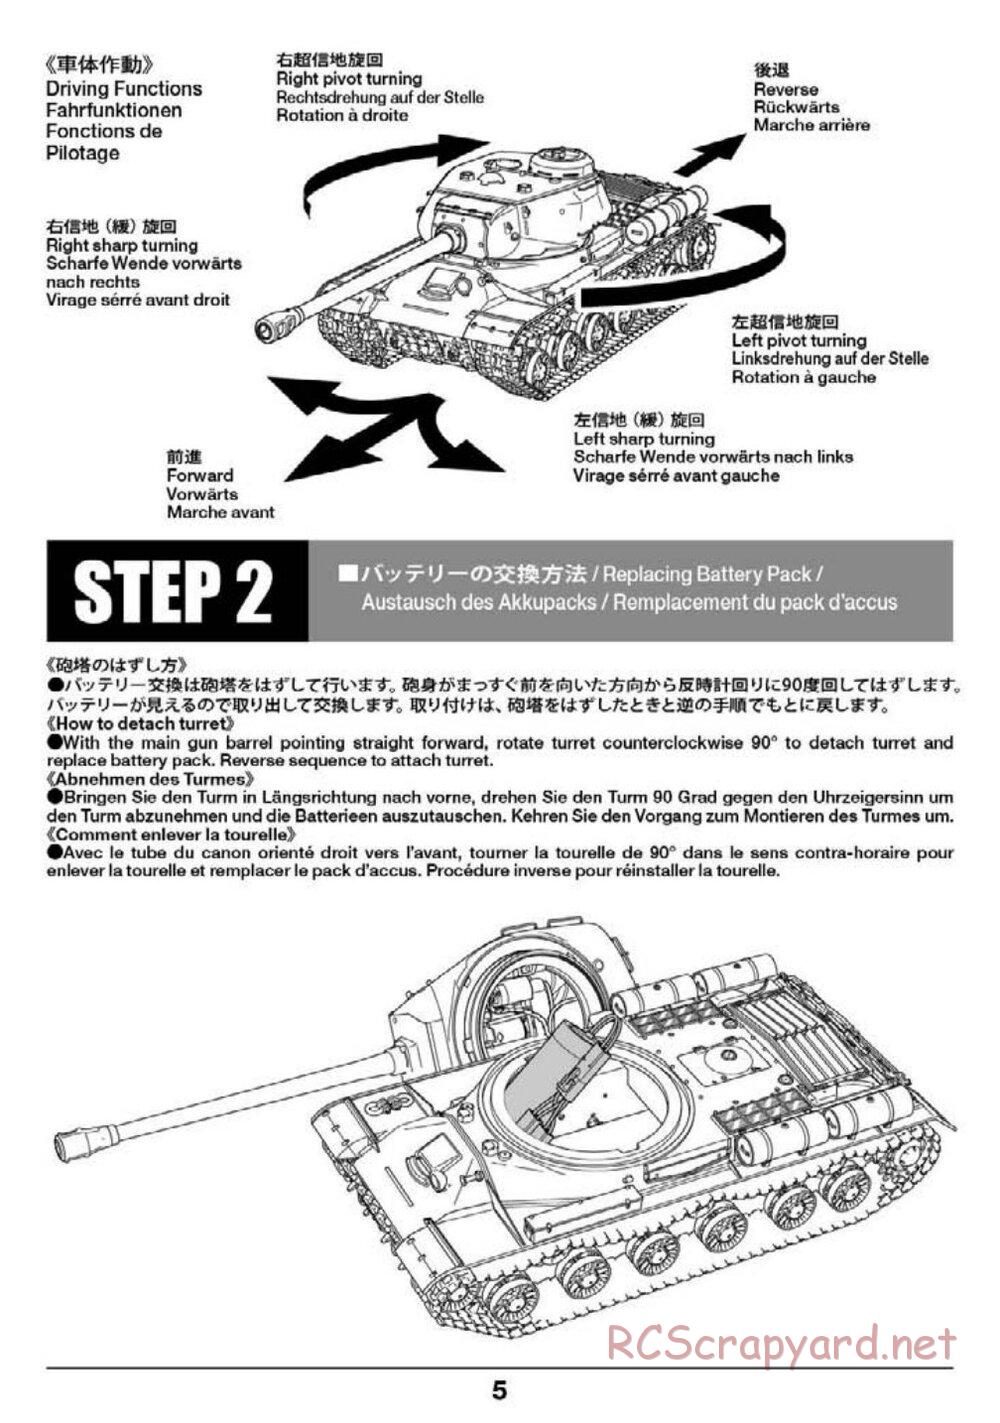 Tamiya - Russian Heavy Tank JS-2 1944 ChKZ - 1/16 Scale Chassis - Operation Manual - Page 5